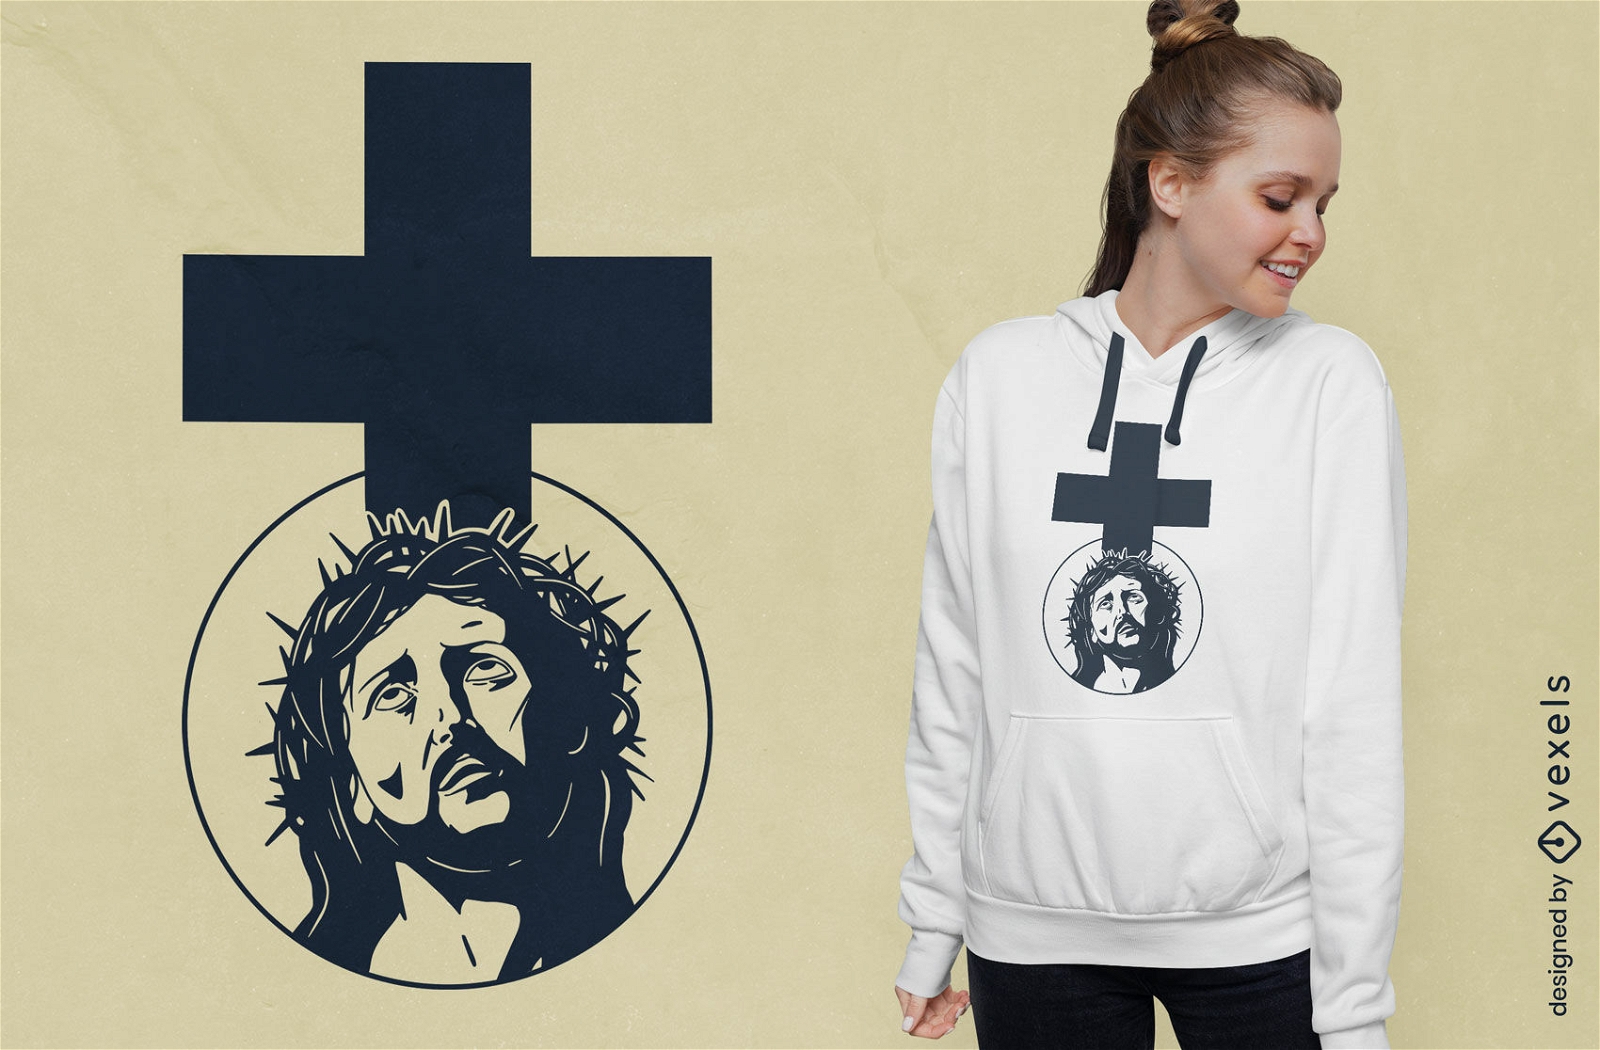 Jesus with a cross religious t-shirt design